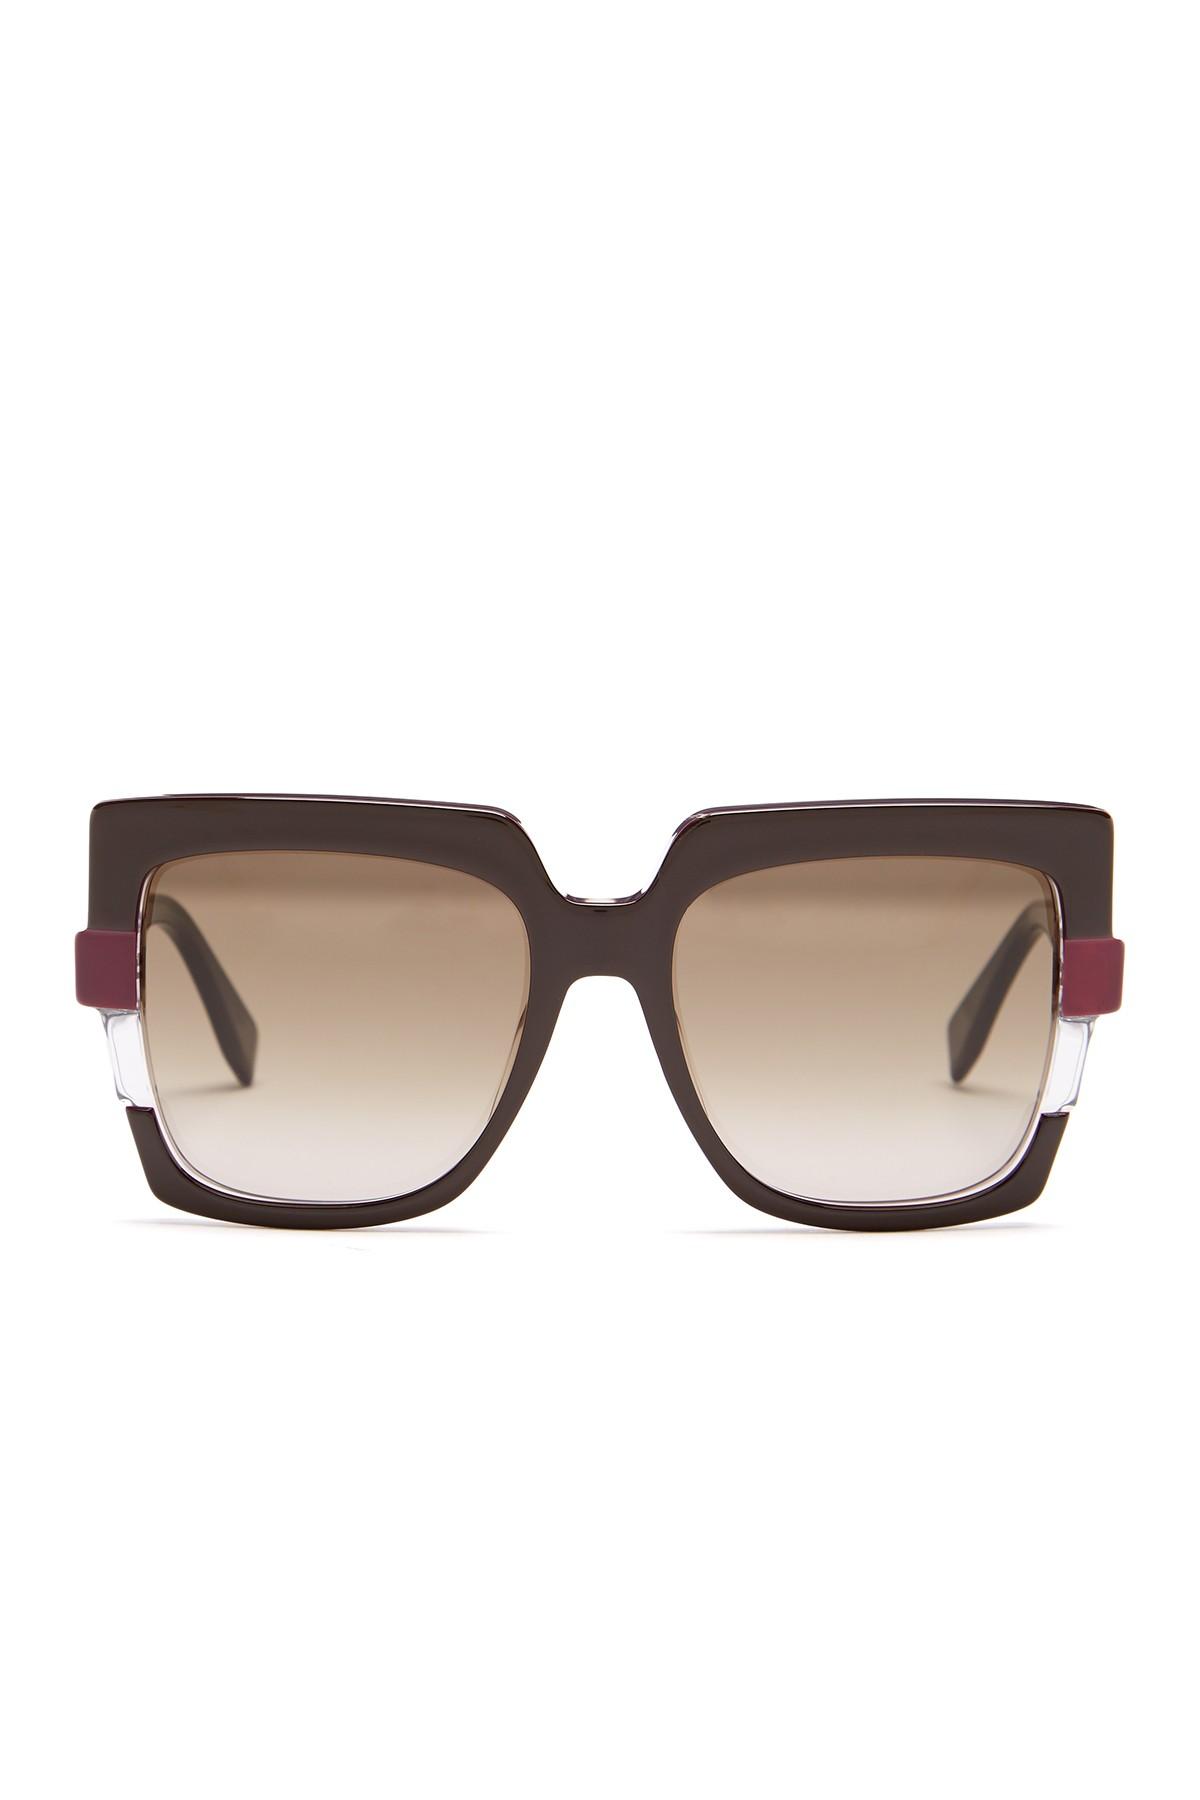 Fendi Women's Metropolis Square Sunglasses | Lyst